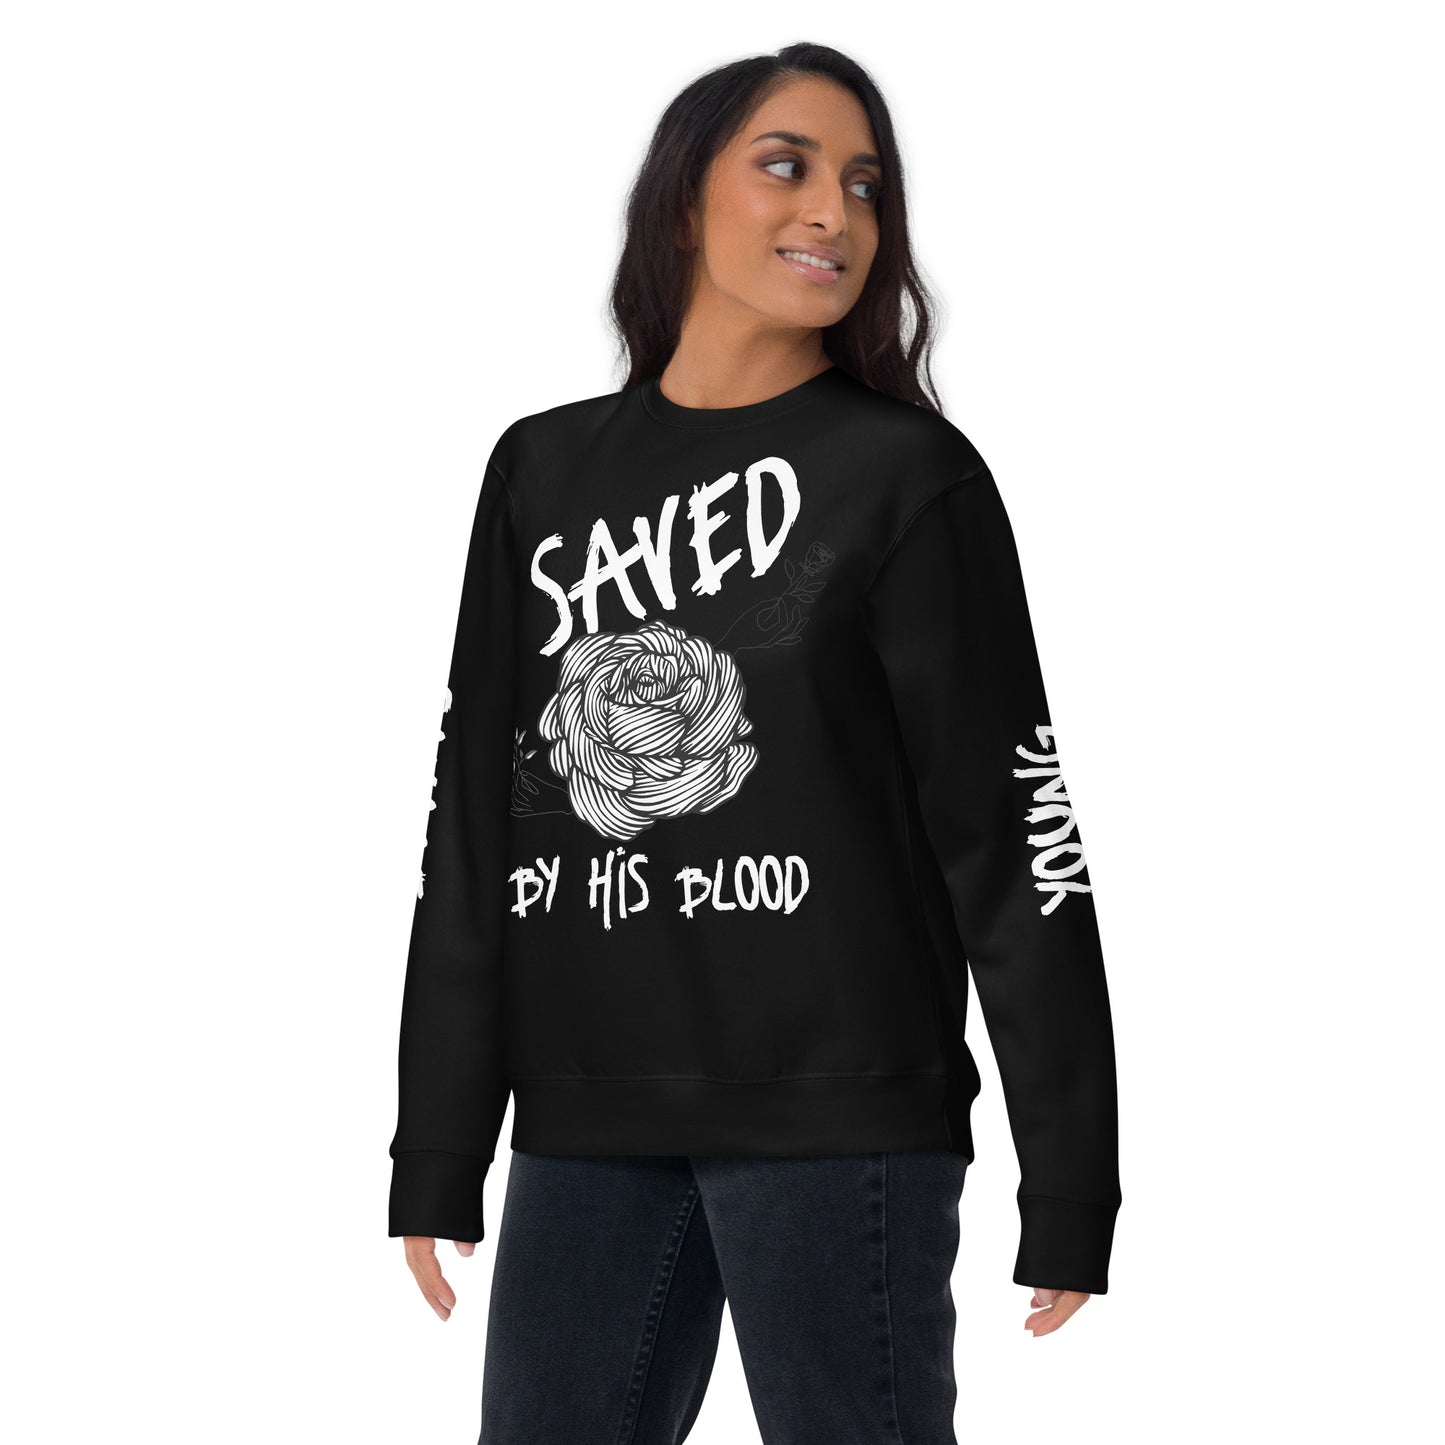 Saved By His Blood - Unisex Premium Sweatshirt